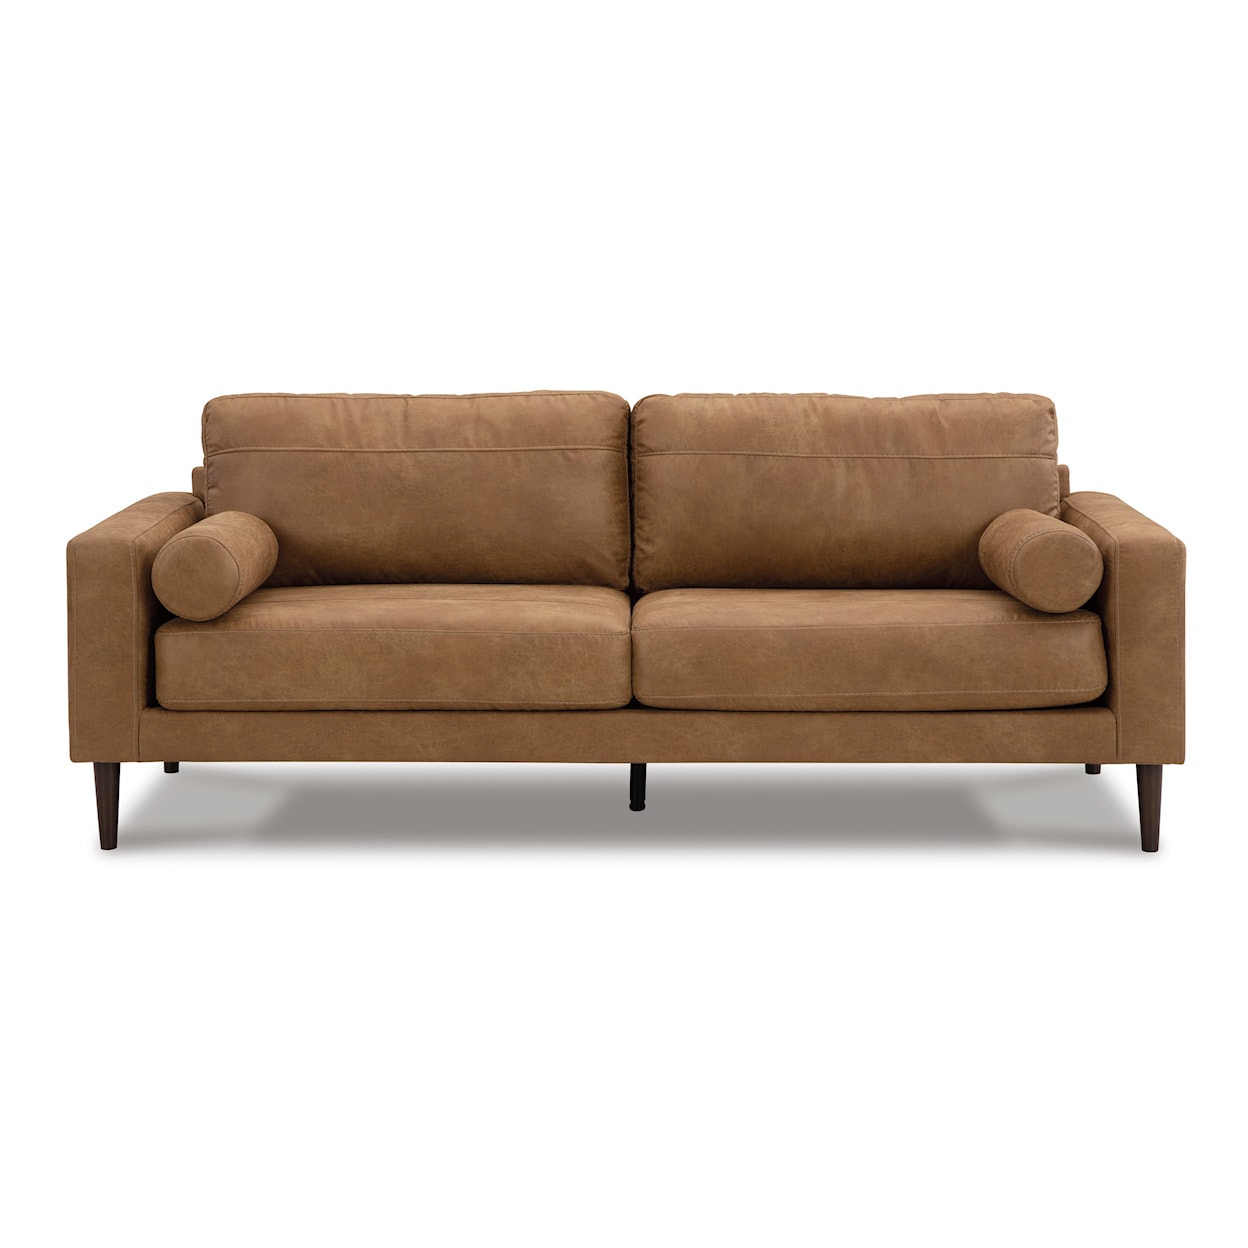 Ashley Furniture Signature Design Telora Sofa